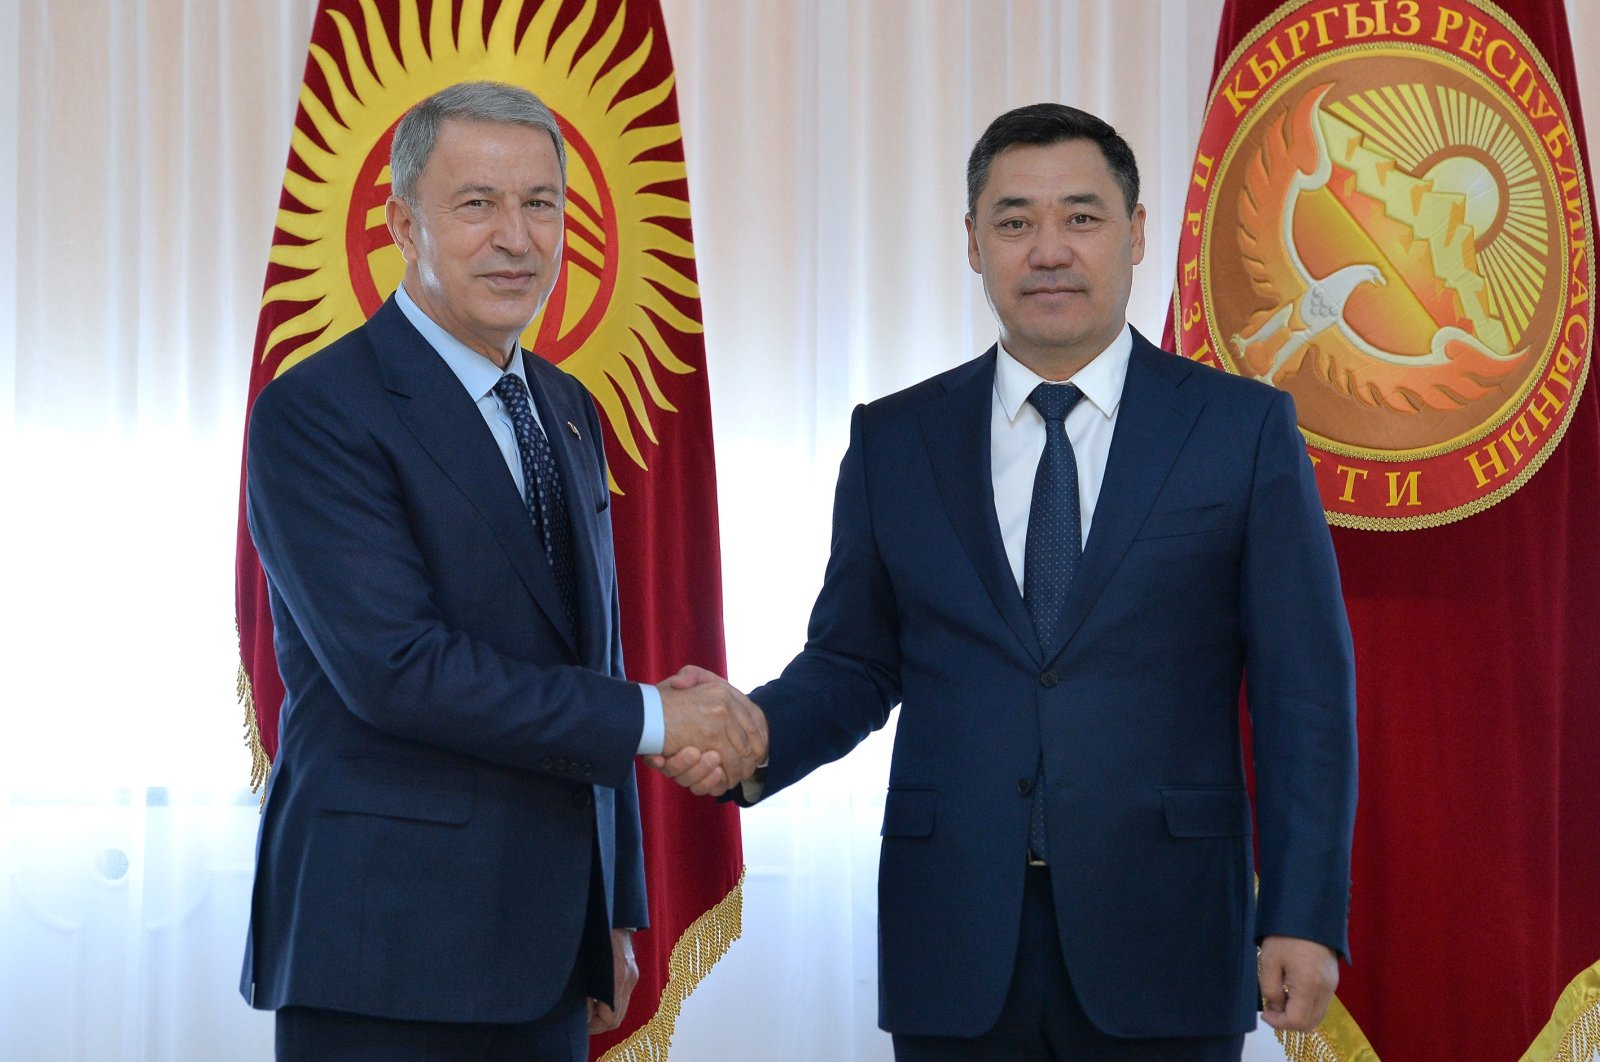 Defense Minister Hulusi Akar together with Kyrgyz President Sadyr Zhaparov in an official visit to Bishkek, Kyrgyzstan, June 30, 2021 (IHA Photo)